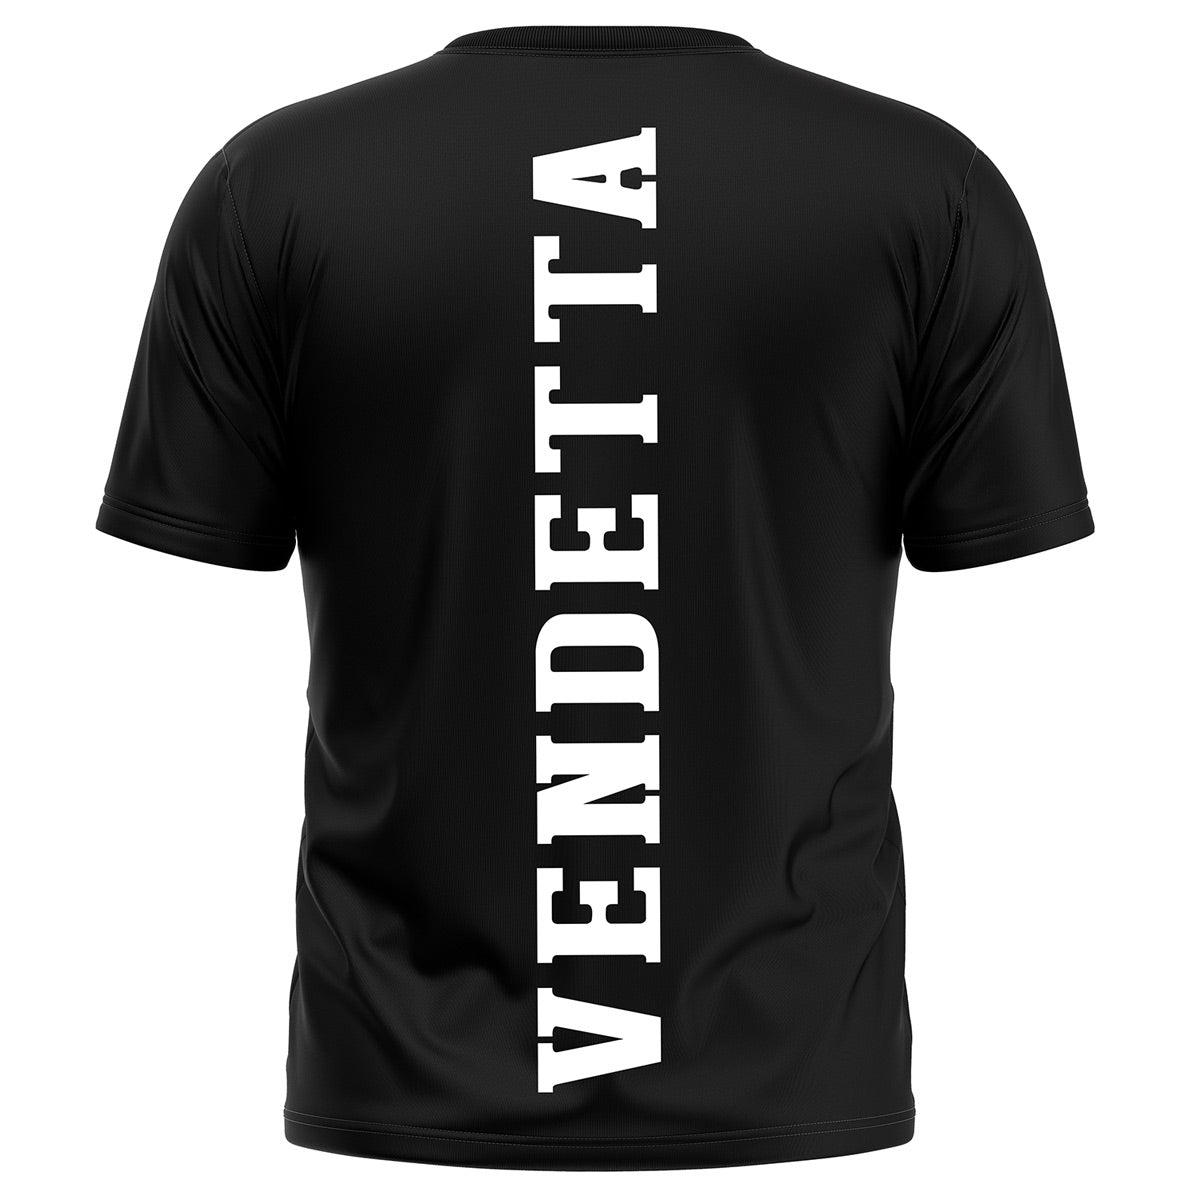 Vendetta Inc. Shirt schwarz X Ultimate